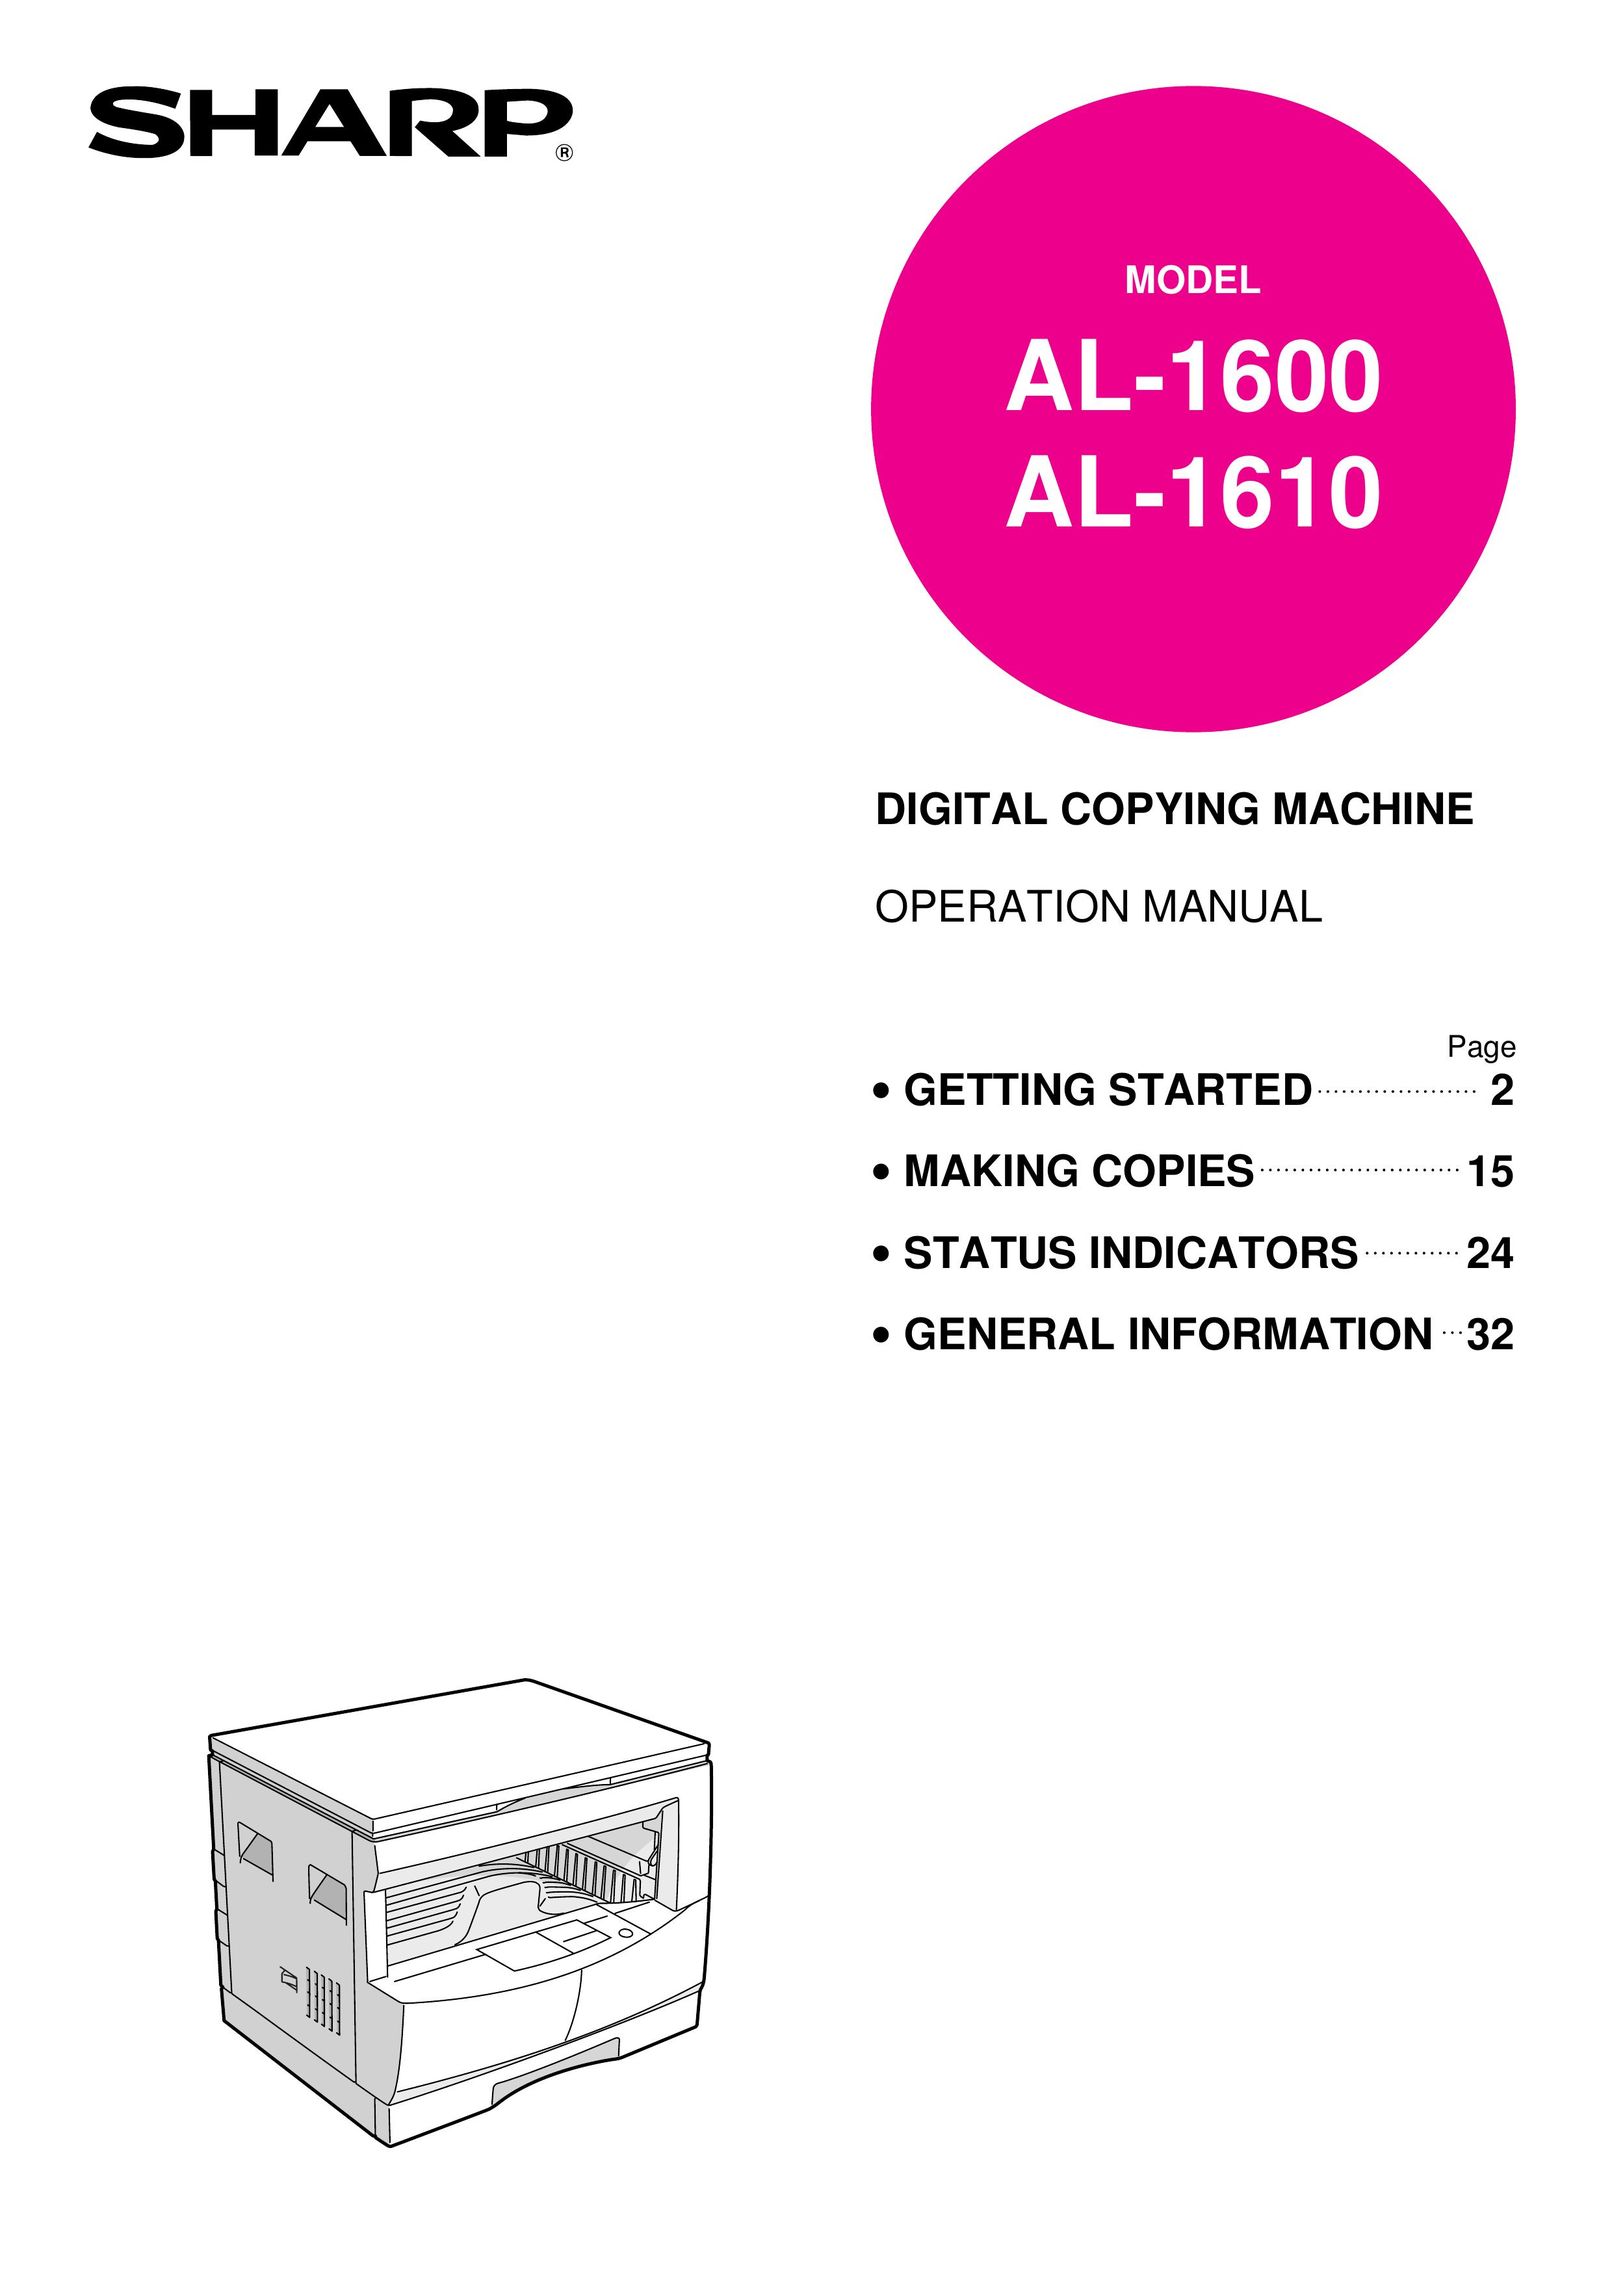 Sharp AL-1610 All in One Printer User Manual